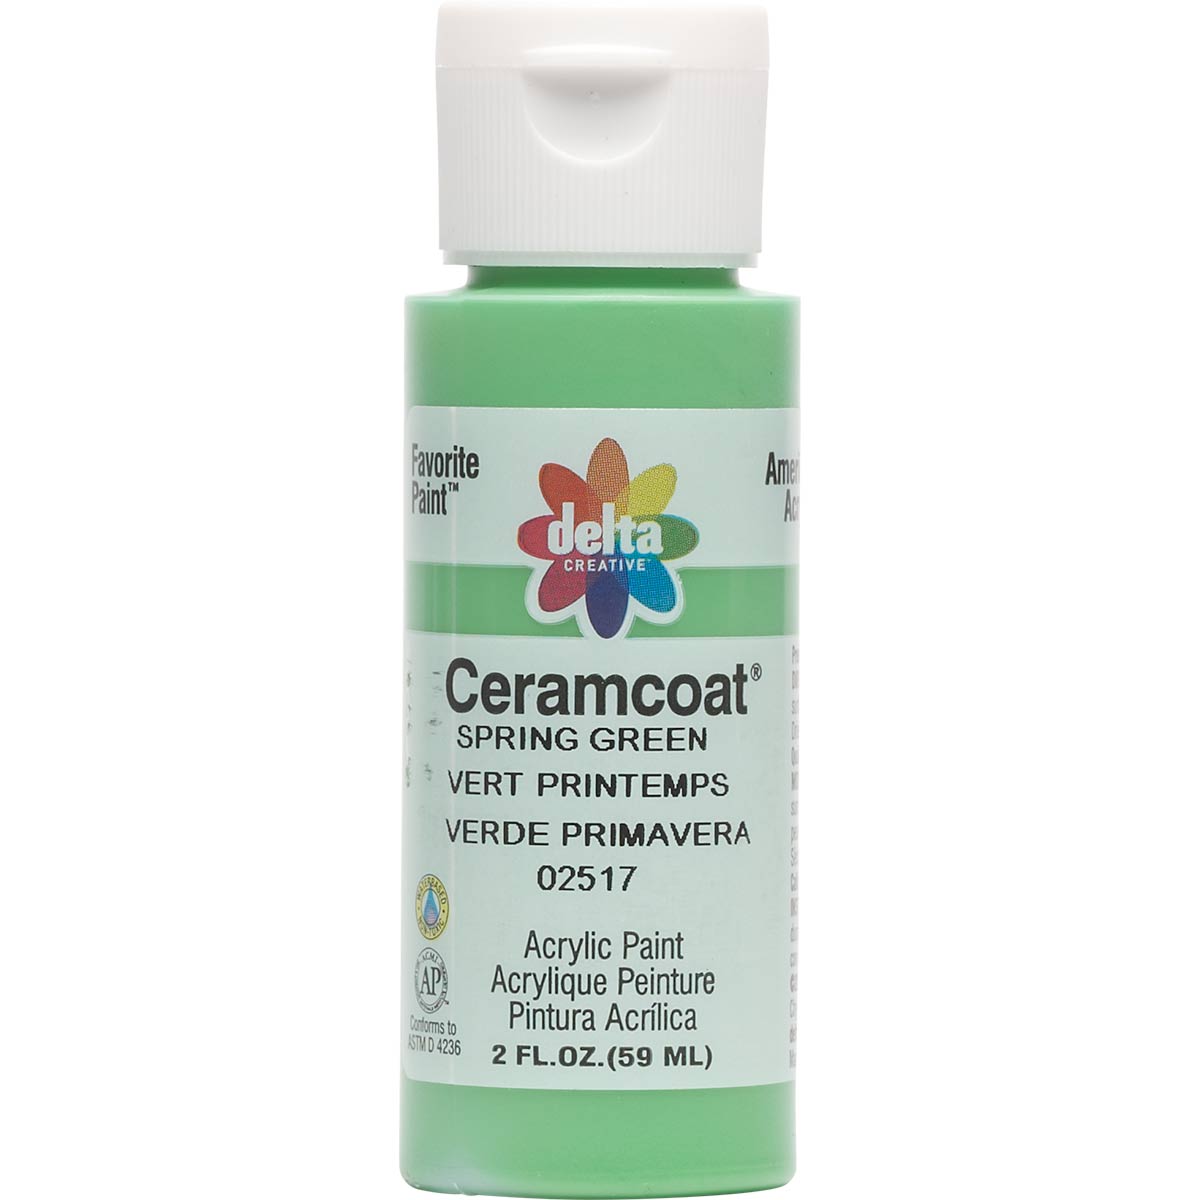 Delta Ceramcoat Acrylic Paint - Spring Green, 2 oz. - 025170202W